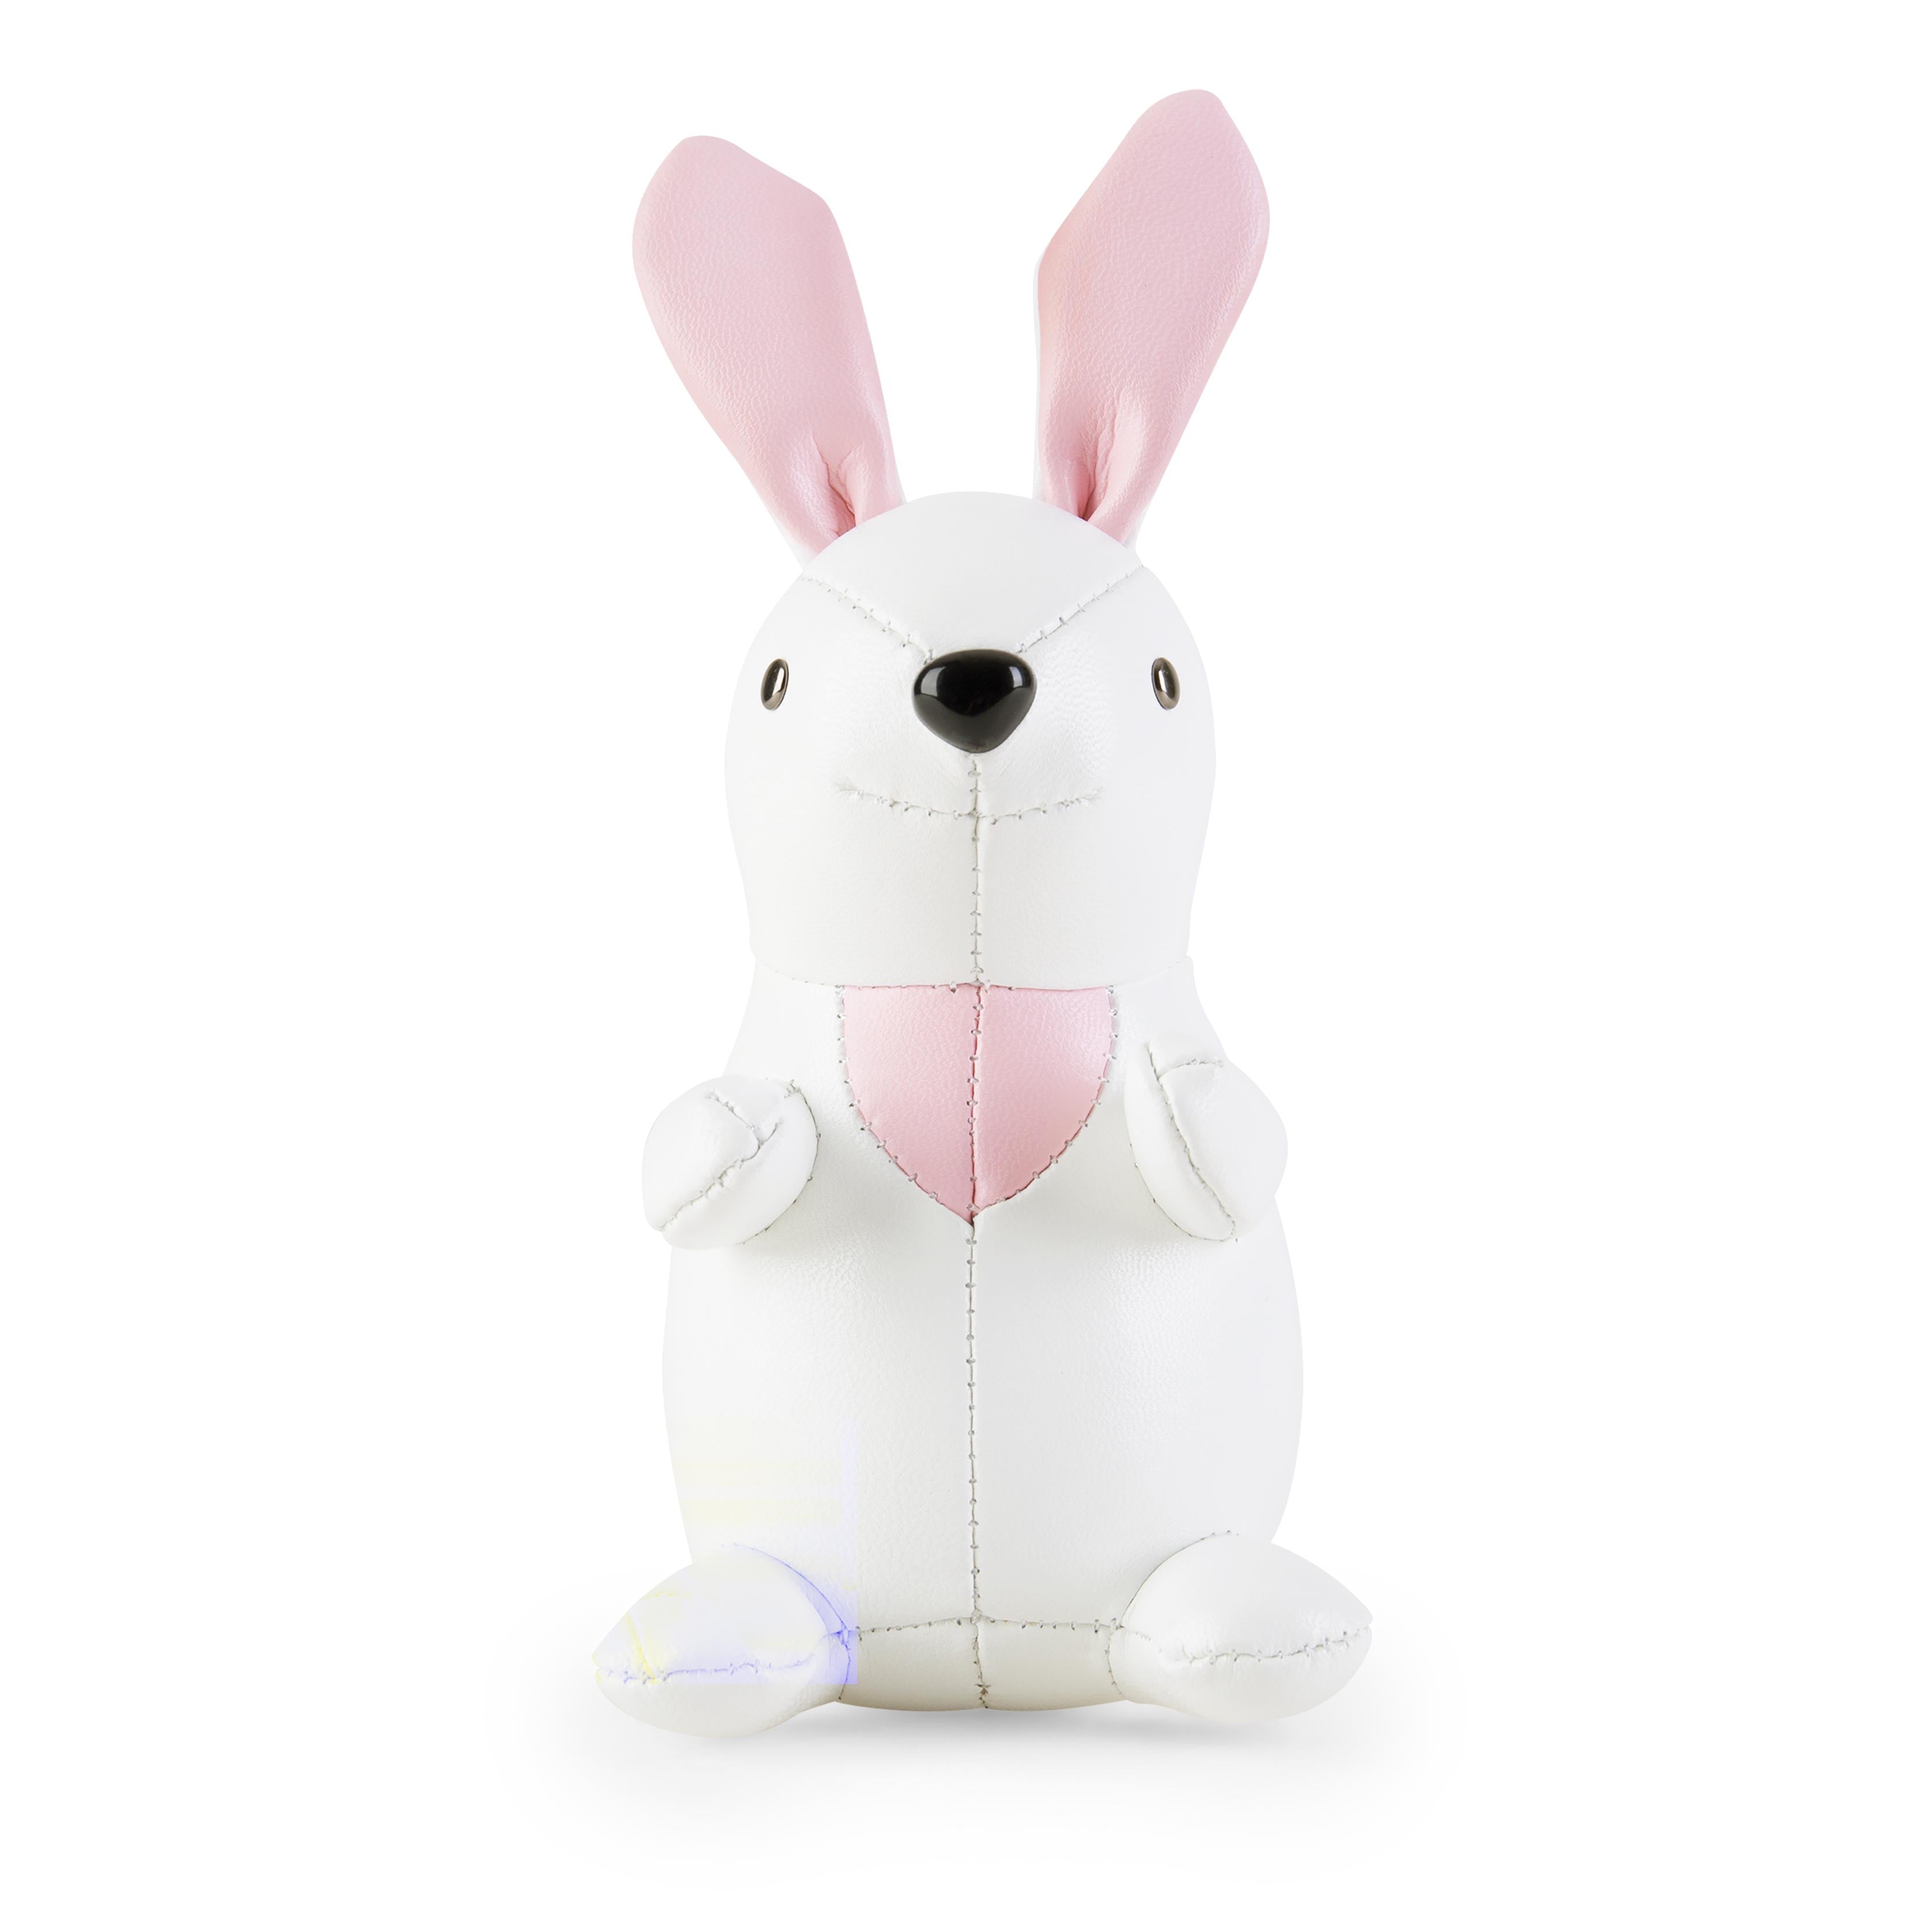 Zuny Rabbit Paperweight,White + Pink